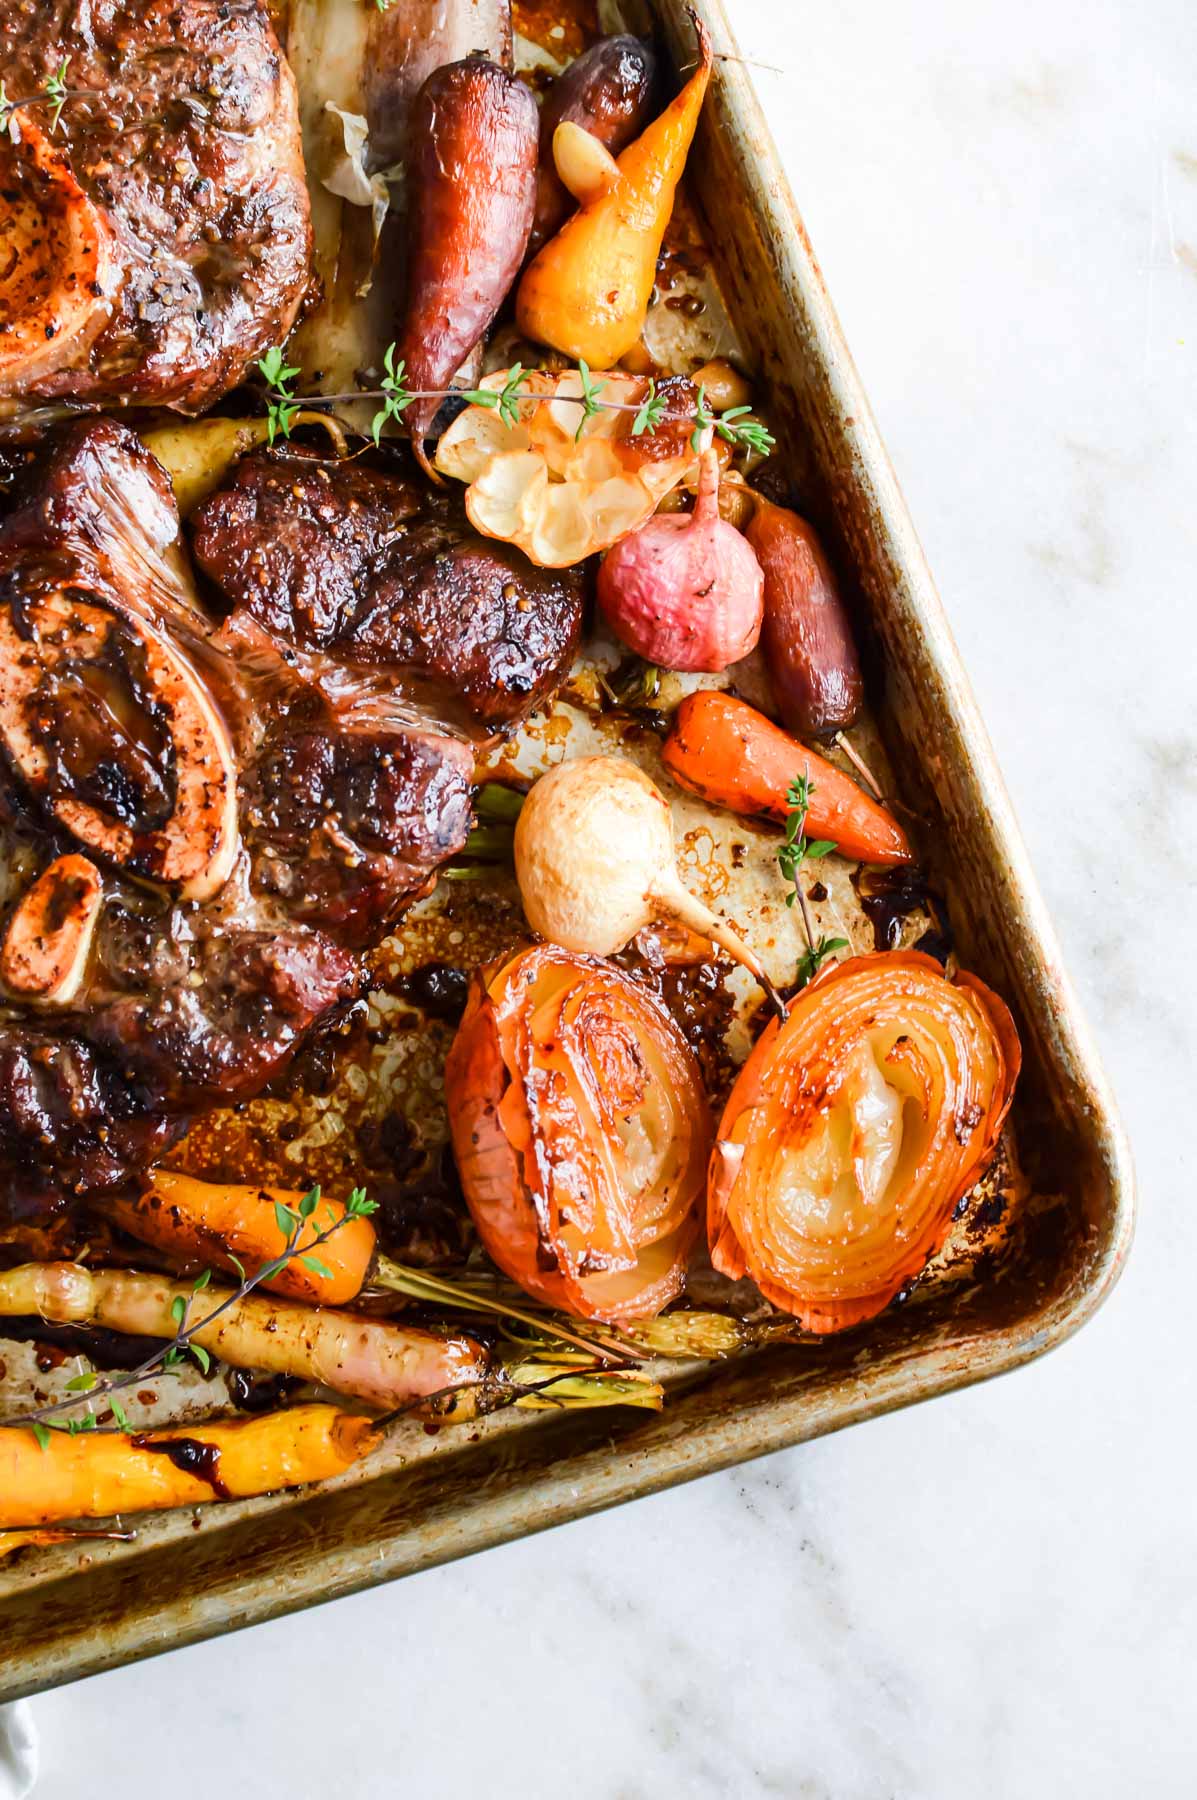 pan with roasted veggies, beef